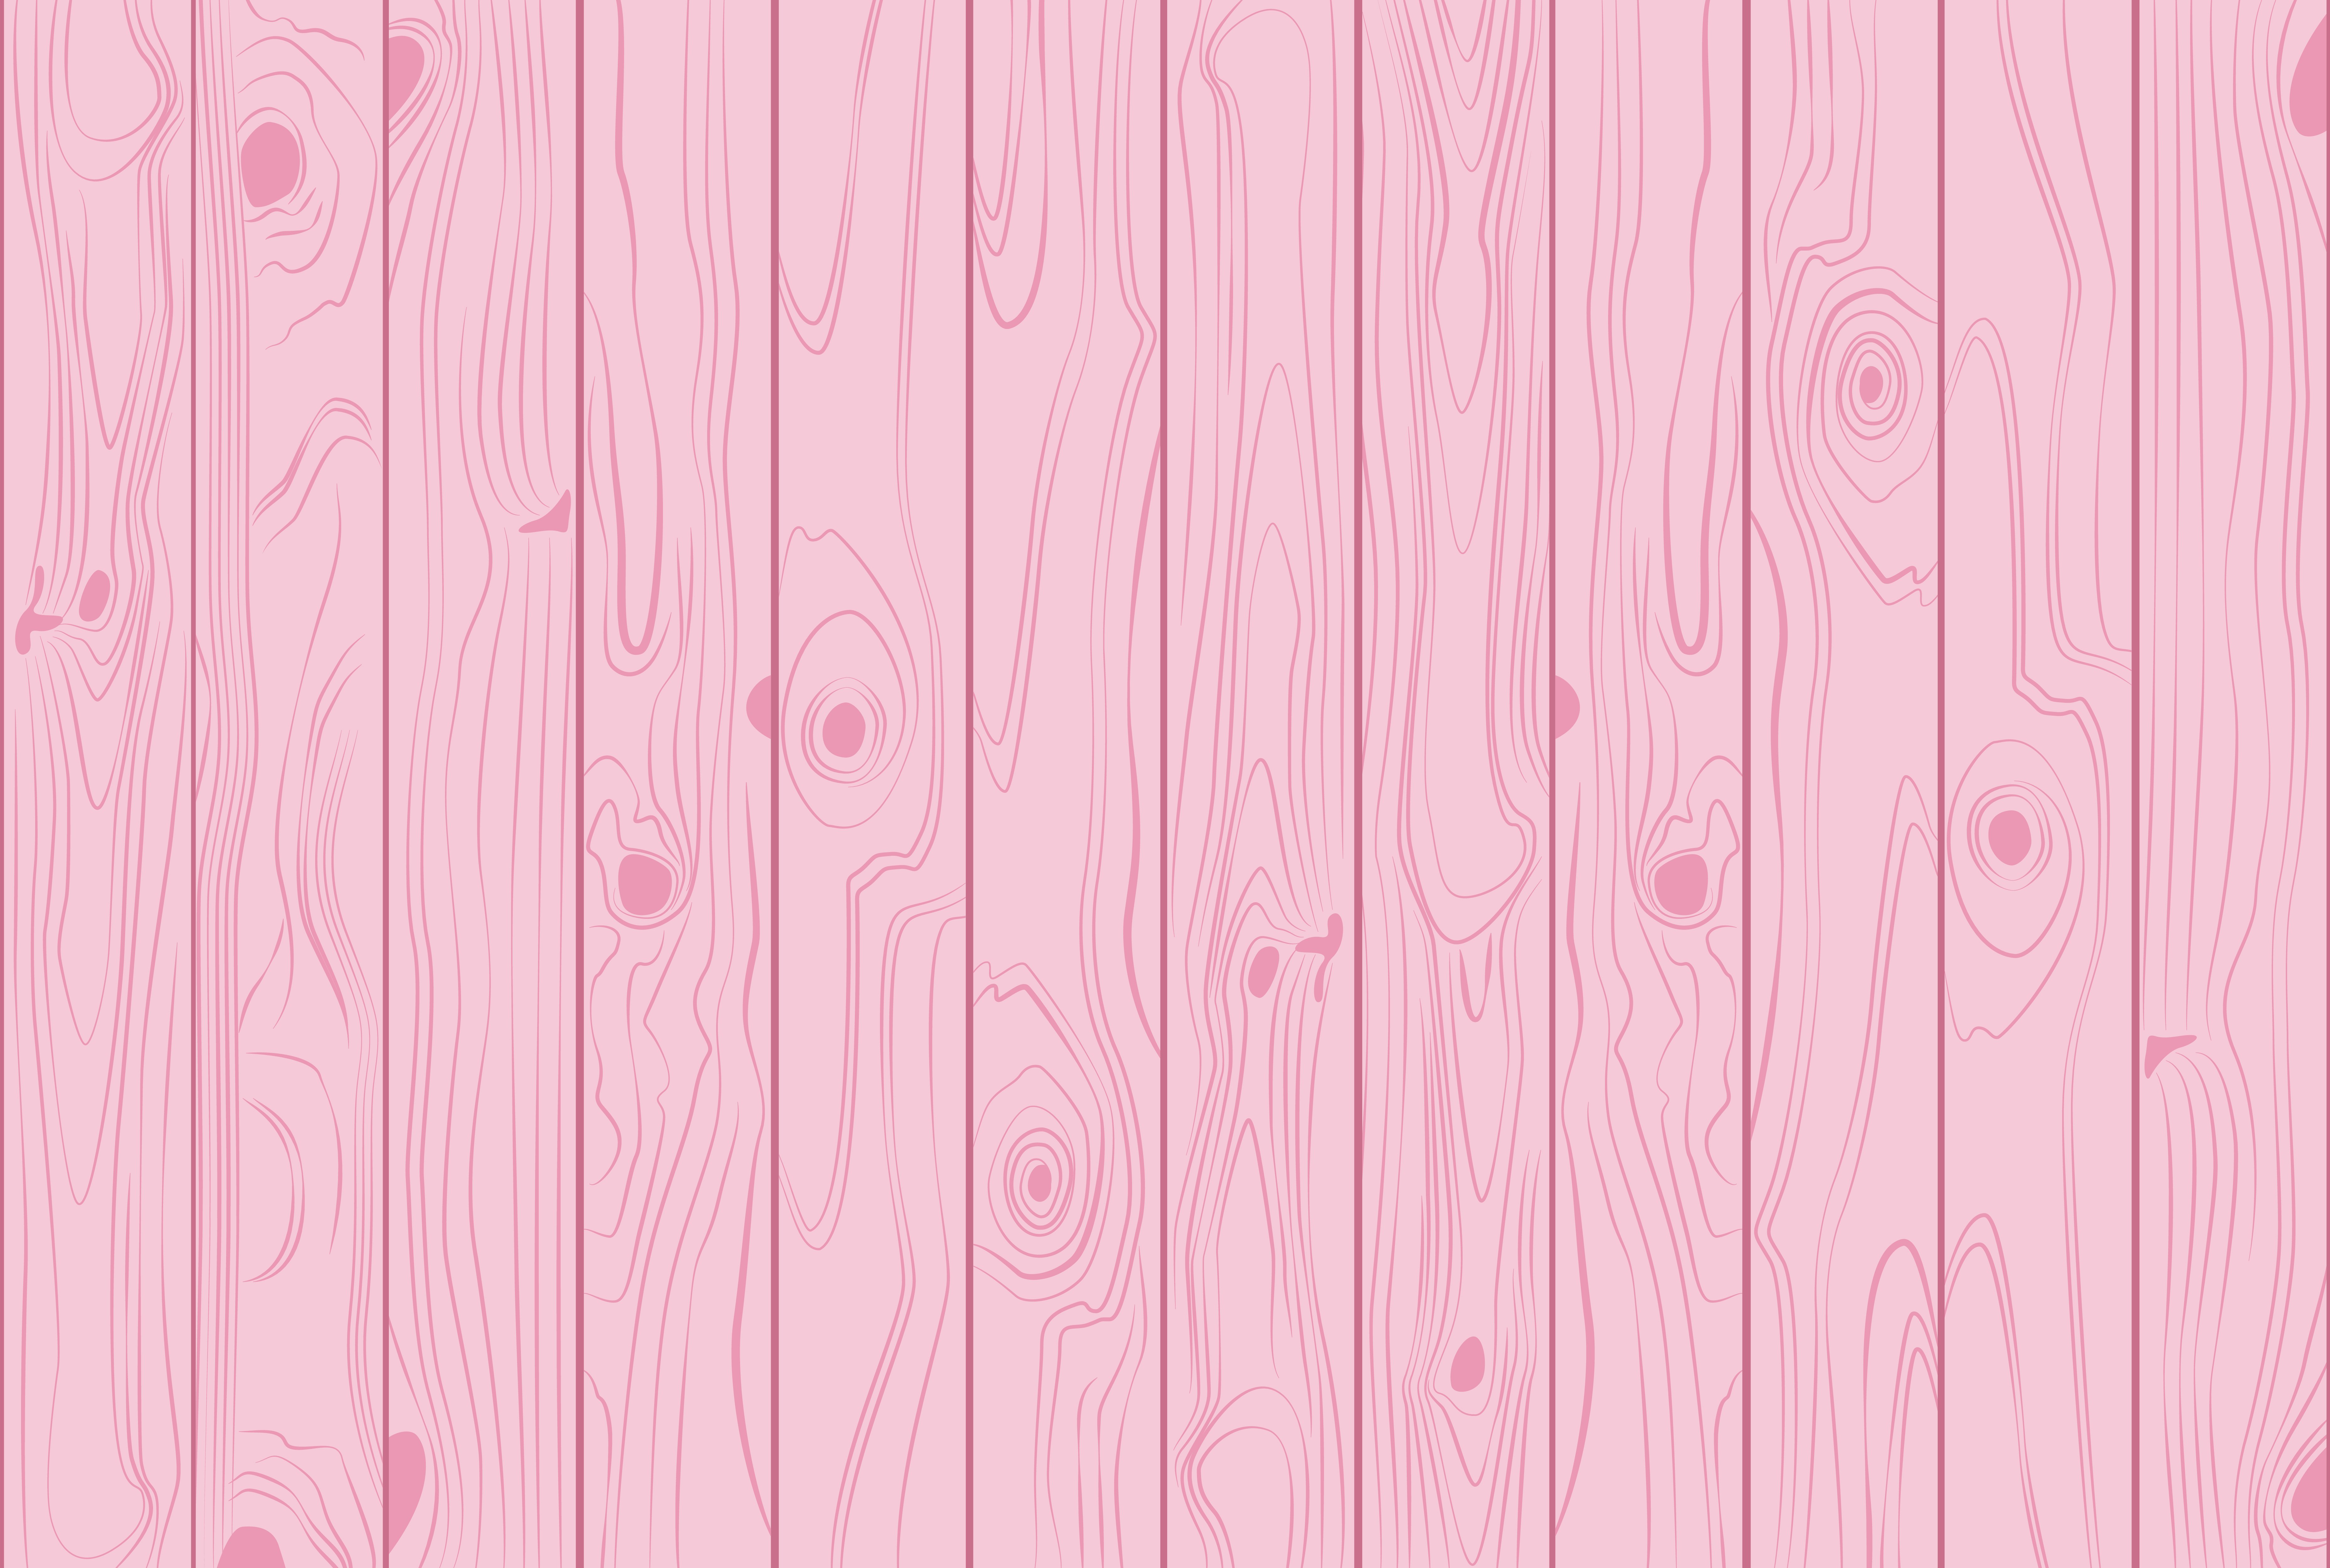 Wooden texture light pink colors pastel background illustration